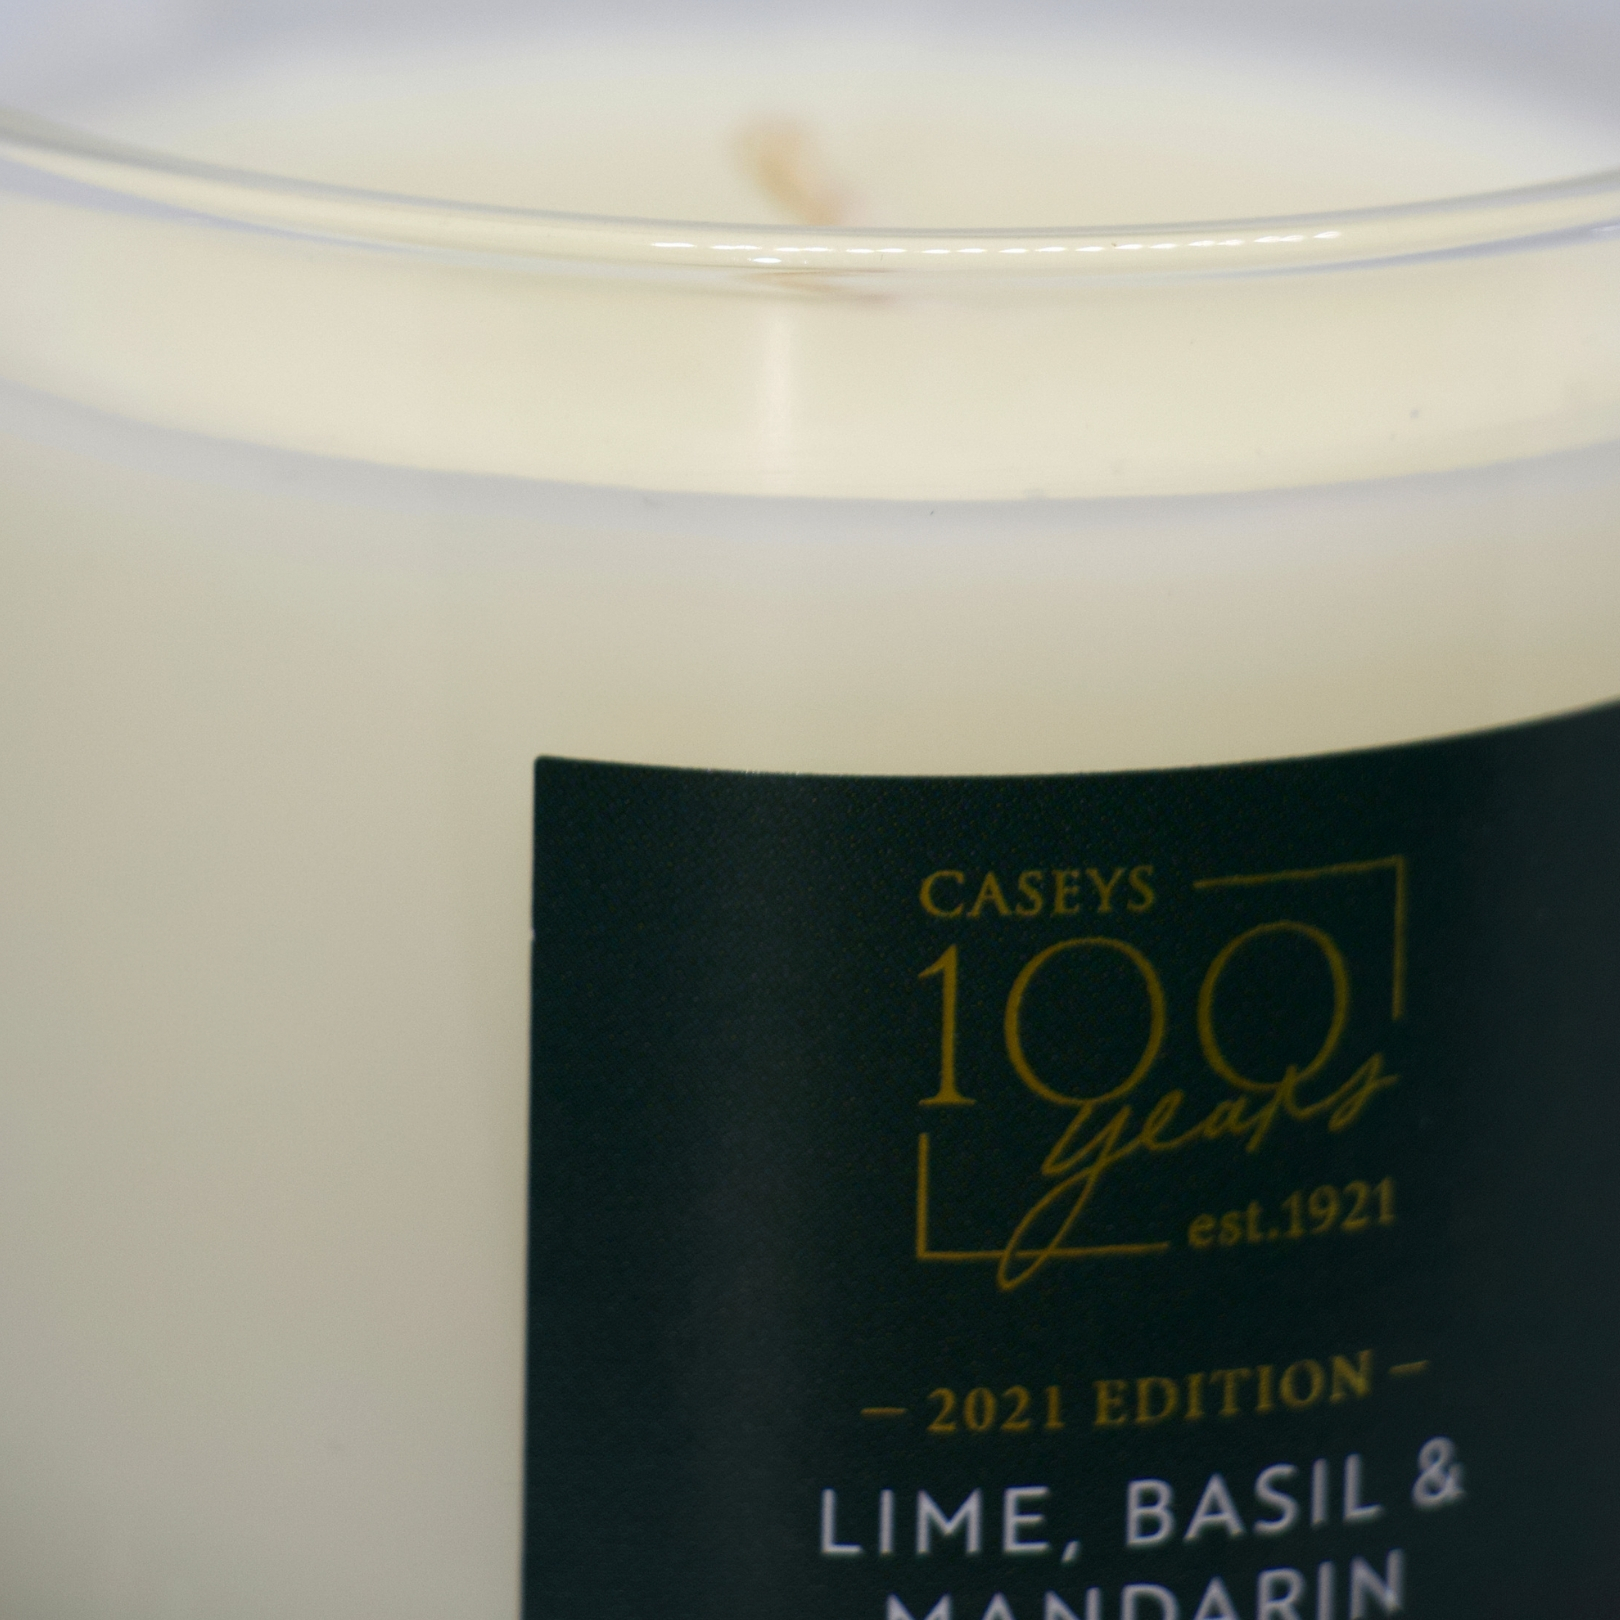 Lime, Basil & Mandarin Anniversary Candle